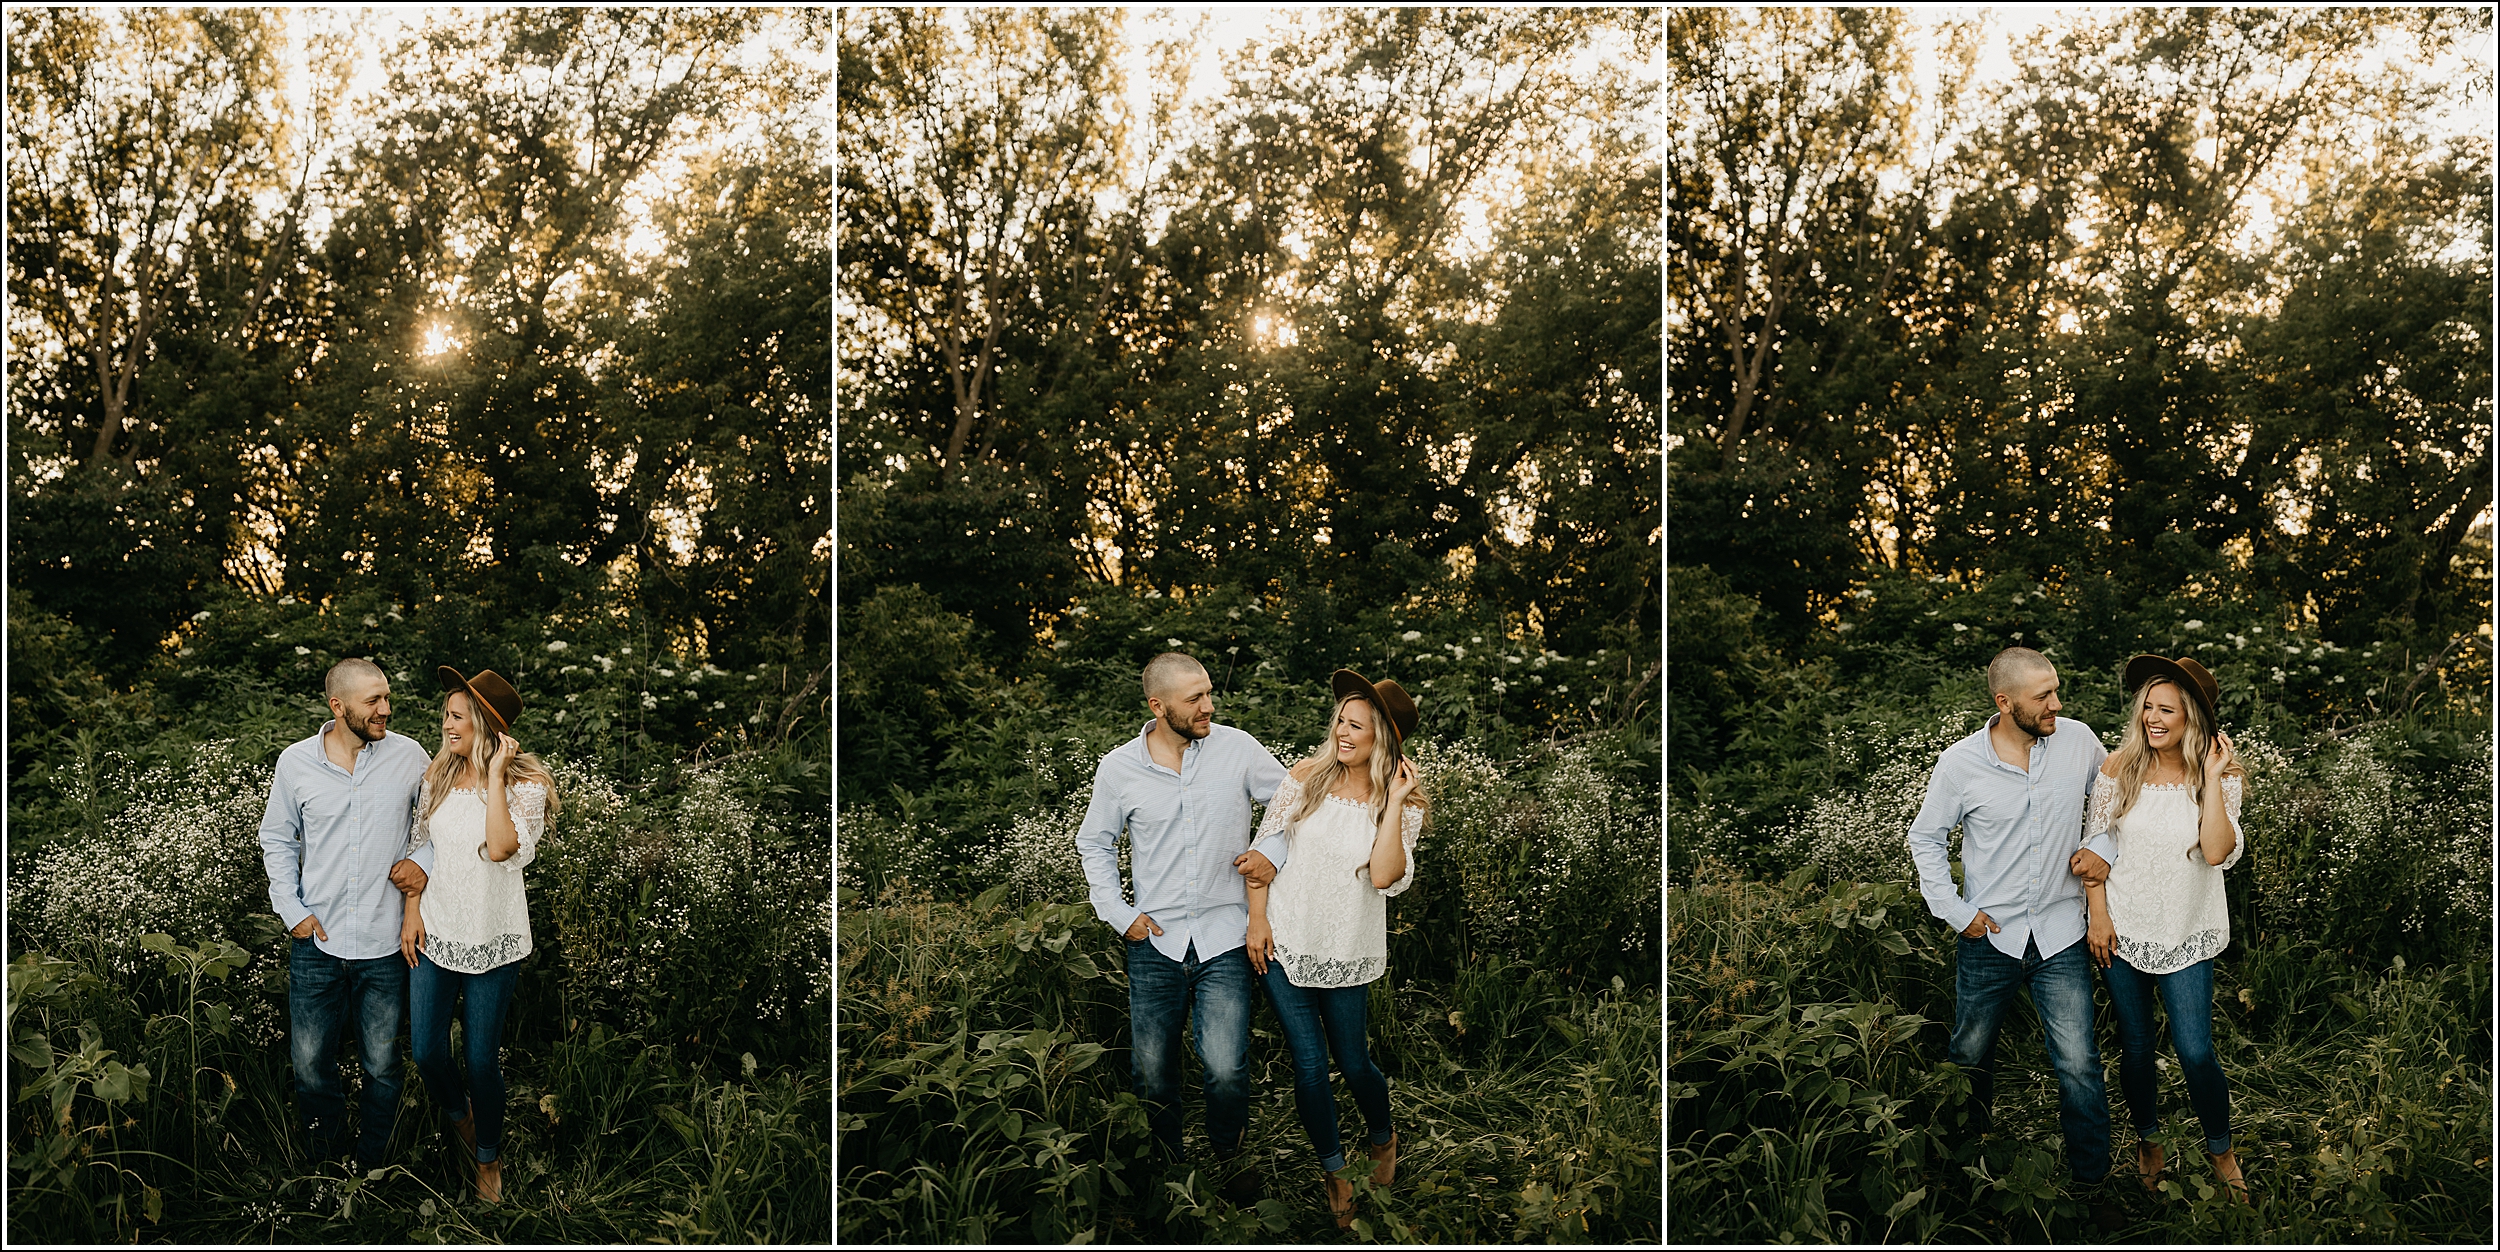 Minnesota outdoor Photographer couple engagement wildflowers sunset trees